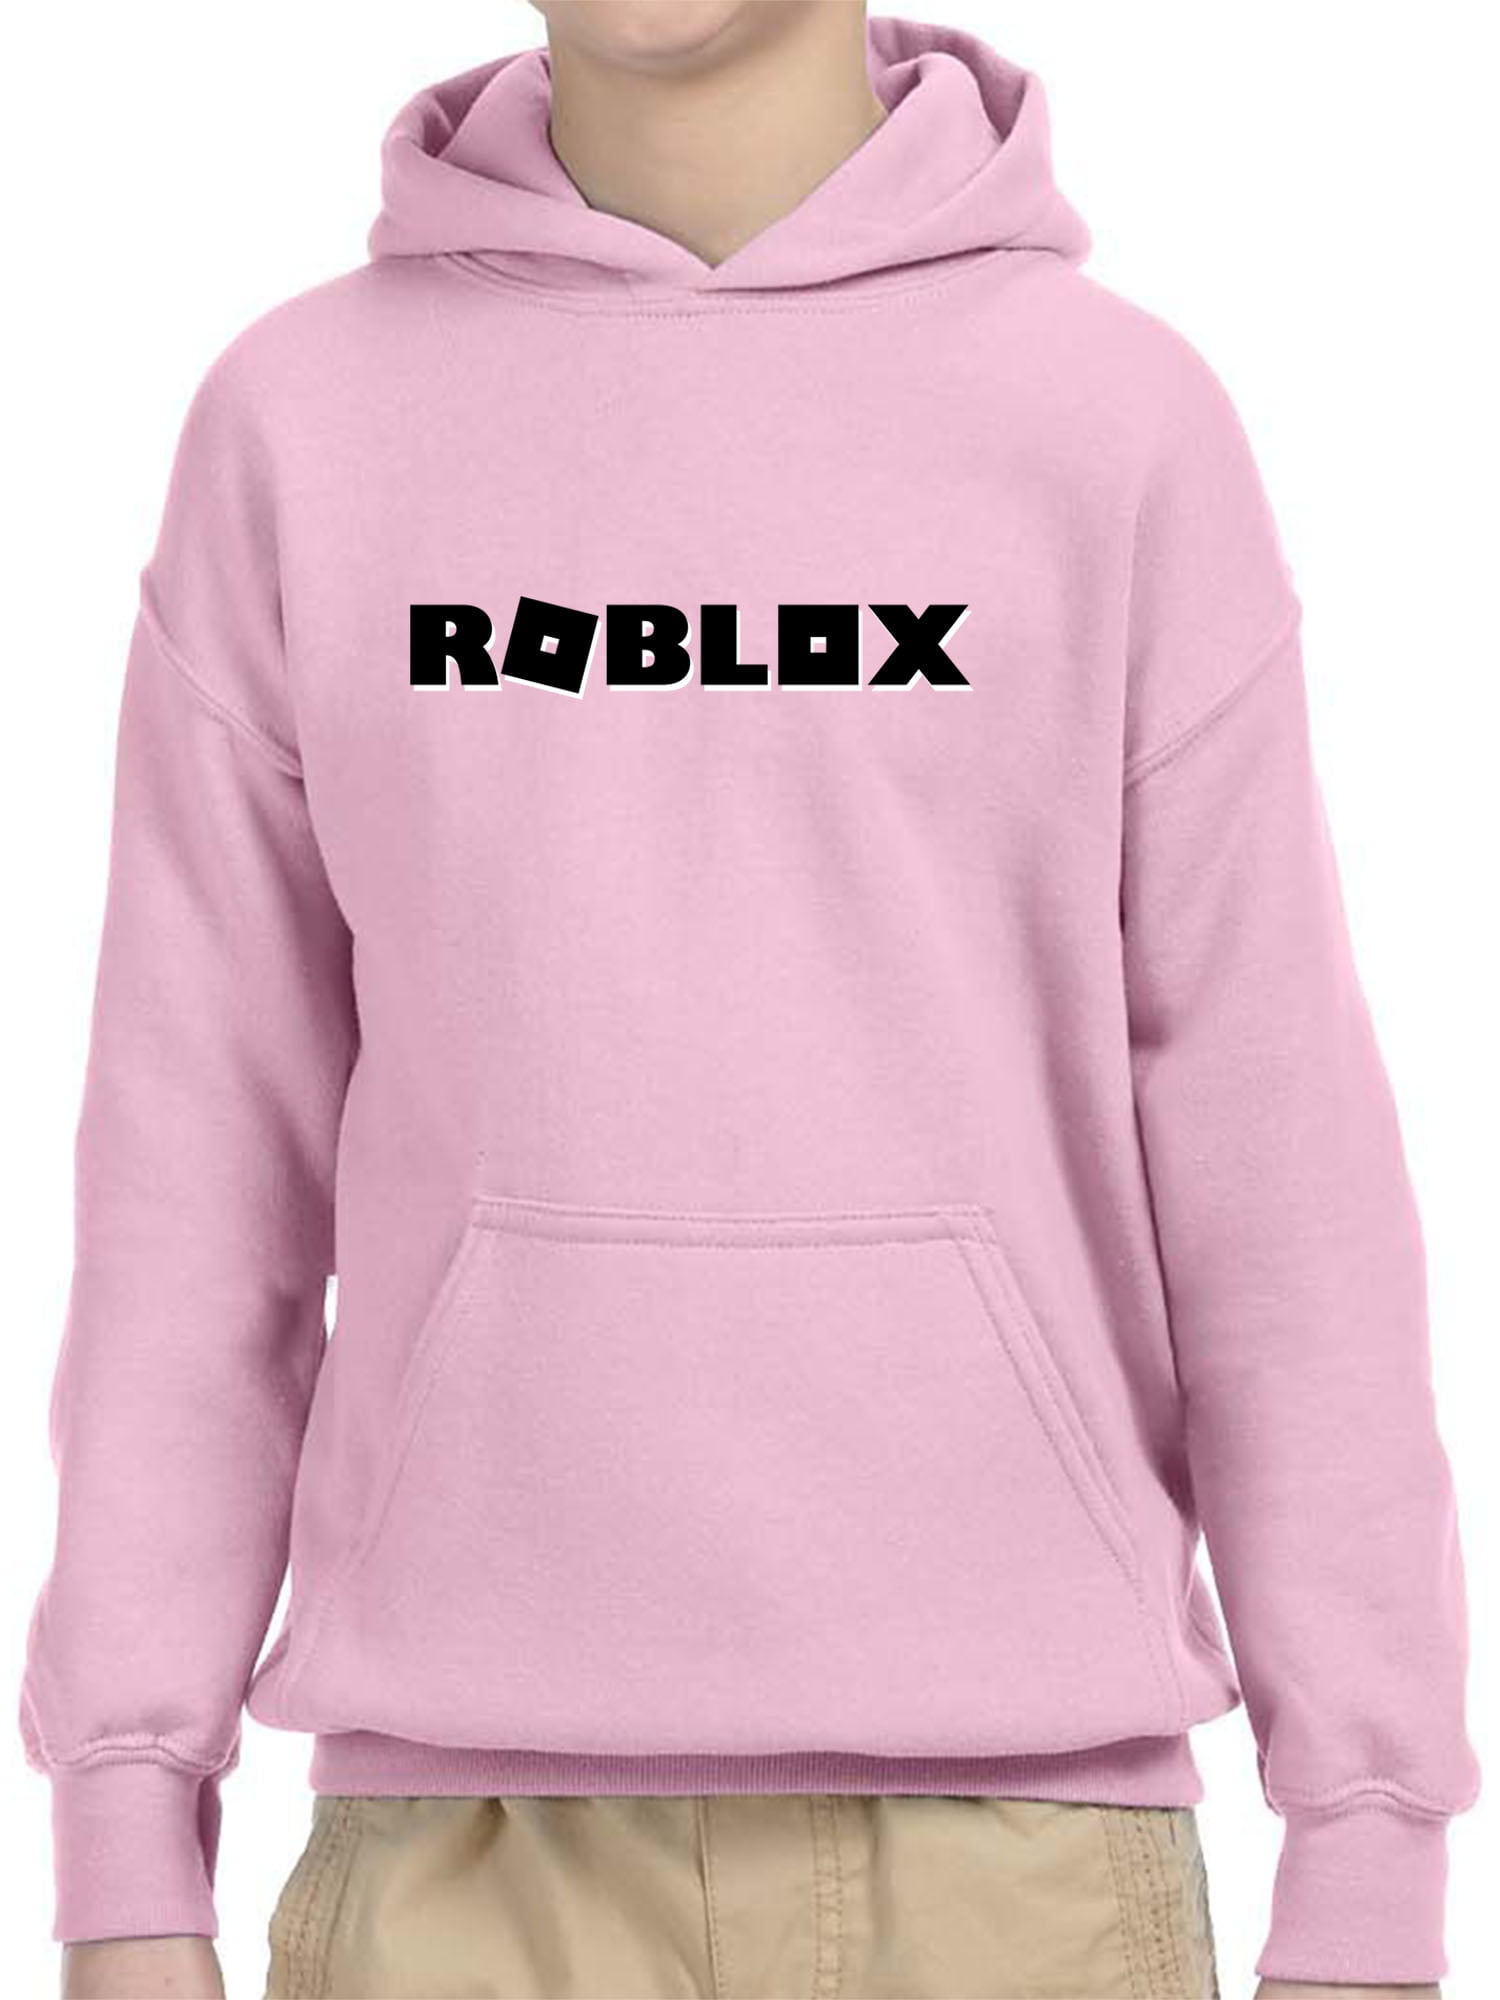 New Way New Way 1168 Youth Hoodie Roblox Block Logo Game Accent Unisex Pullover Sweatshirt Medium Light Pink Walmart Com Walmart Com - roblox outfit codes hoodies